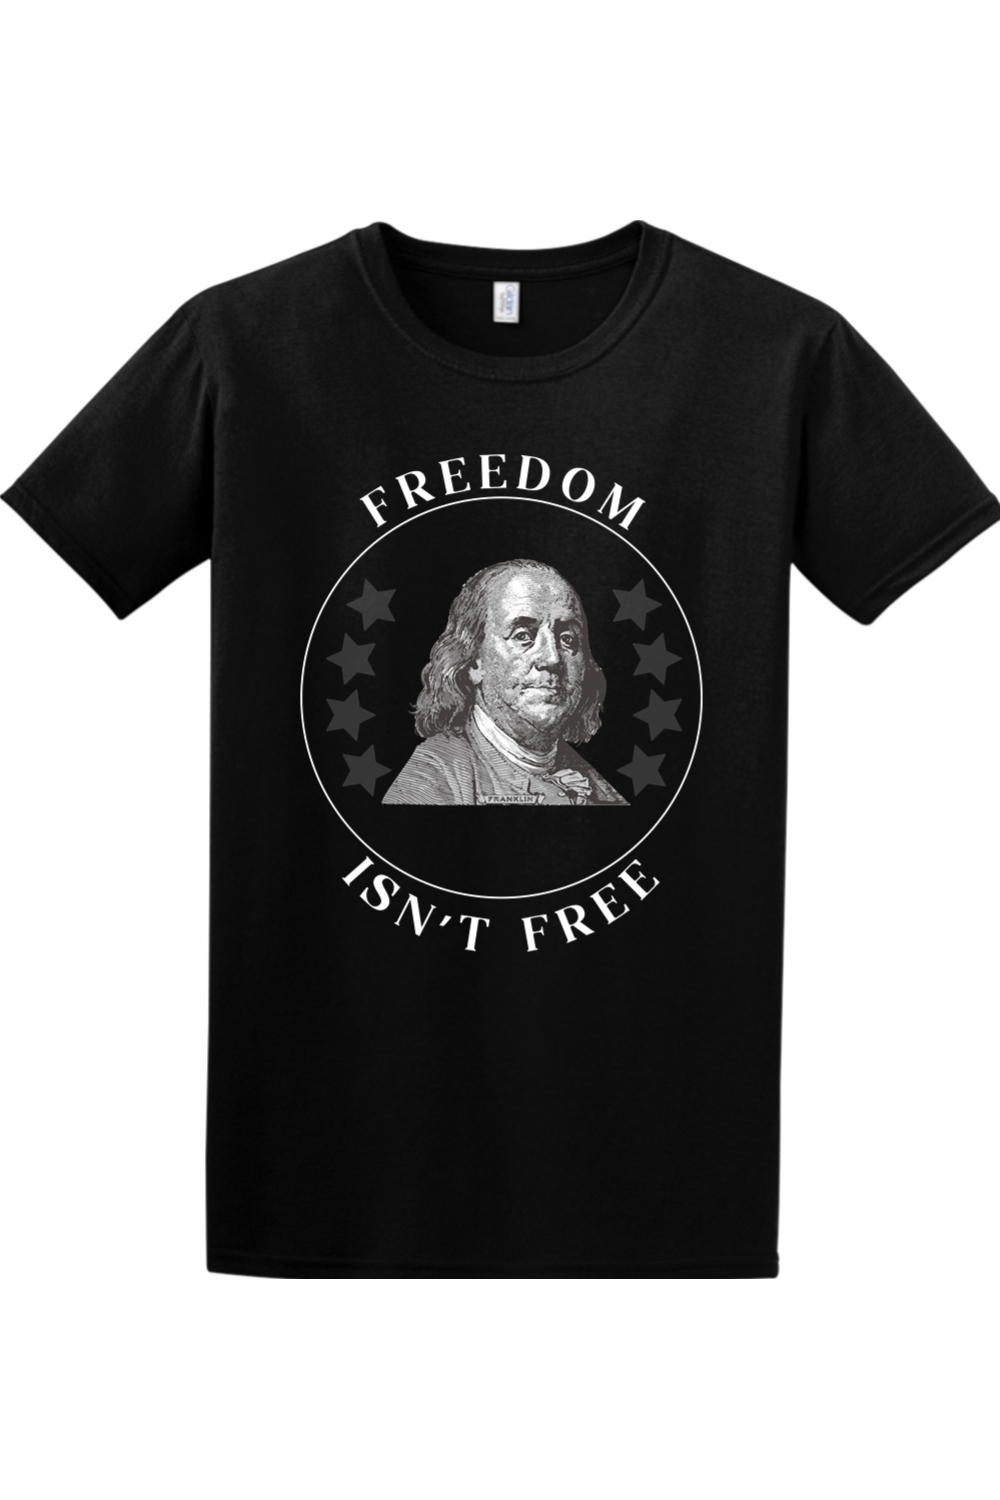 Franklin - Freedom Isn't Free